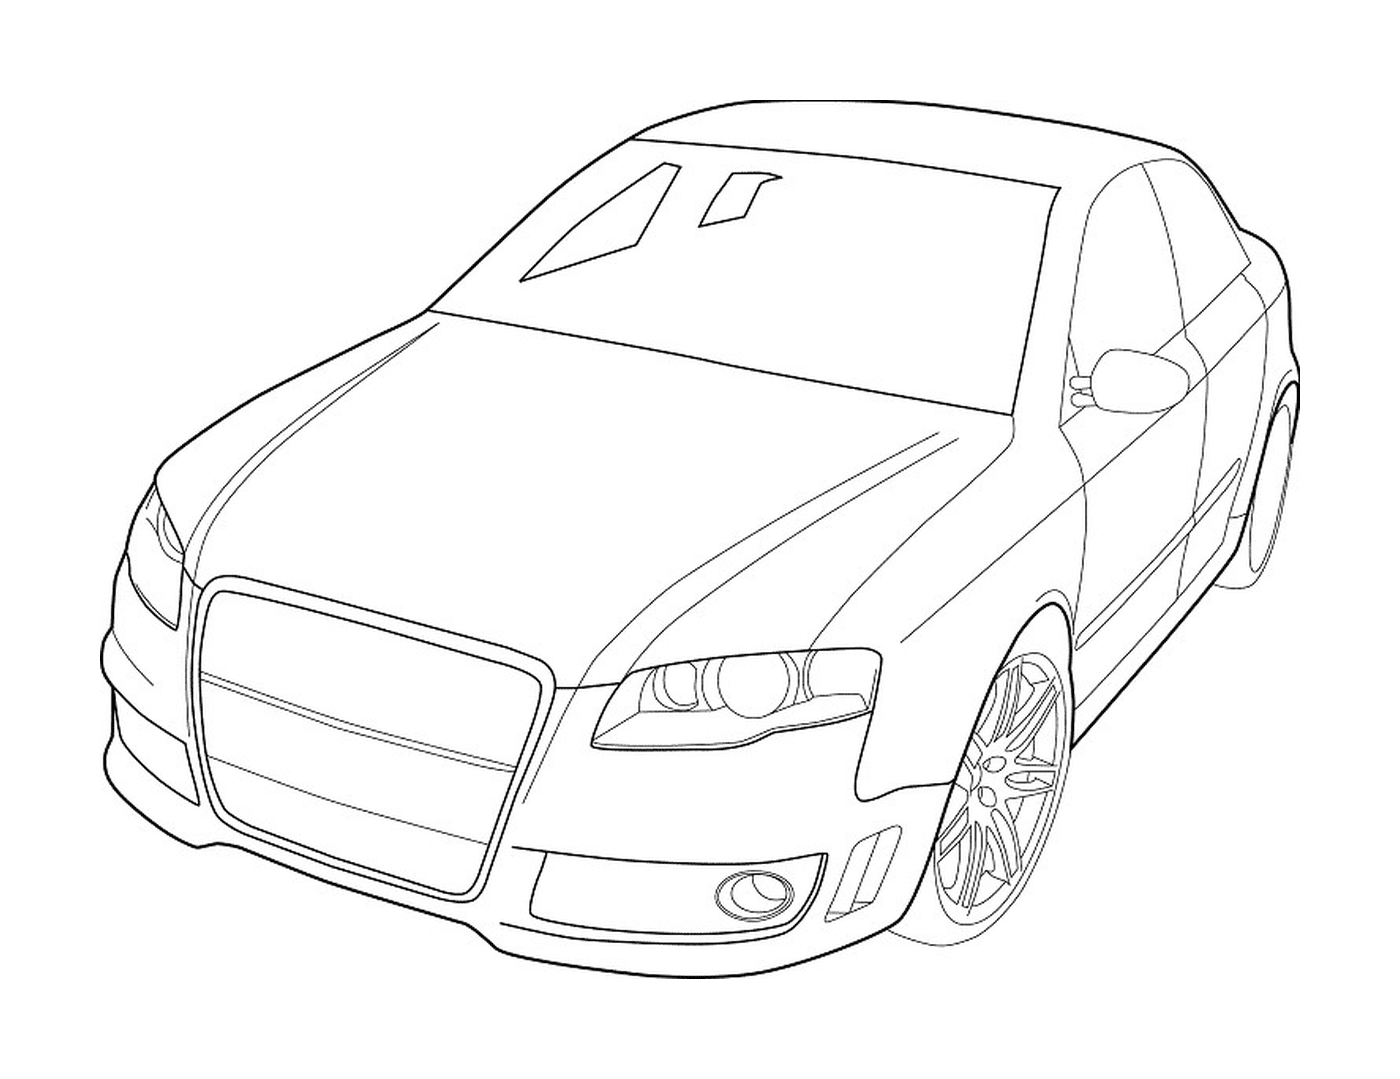  Автомобиль Audi спроектирован 